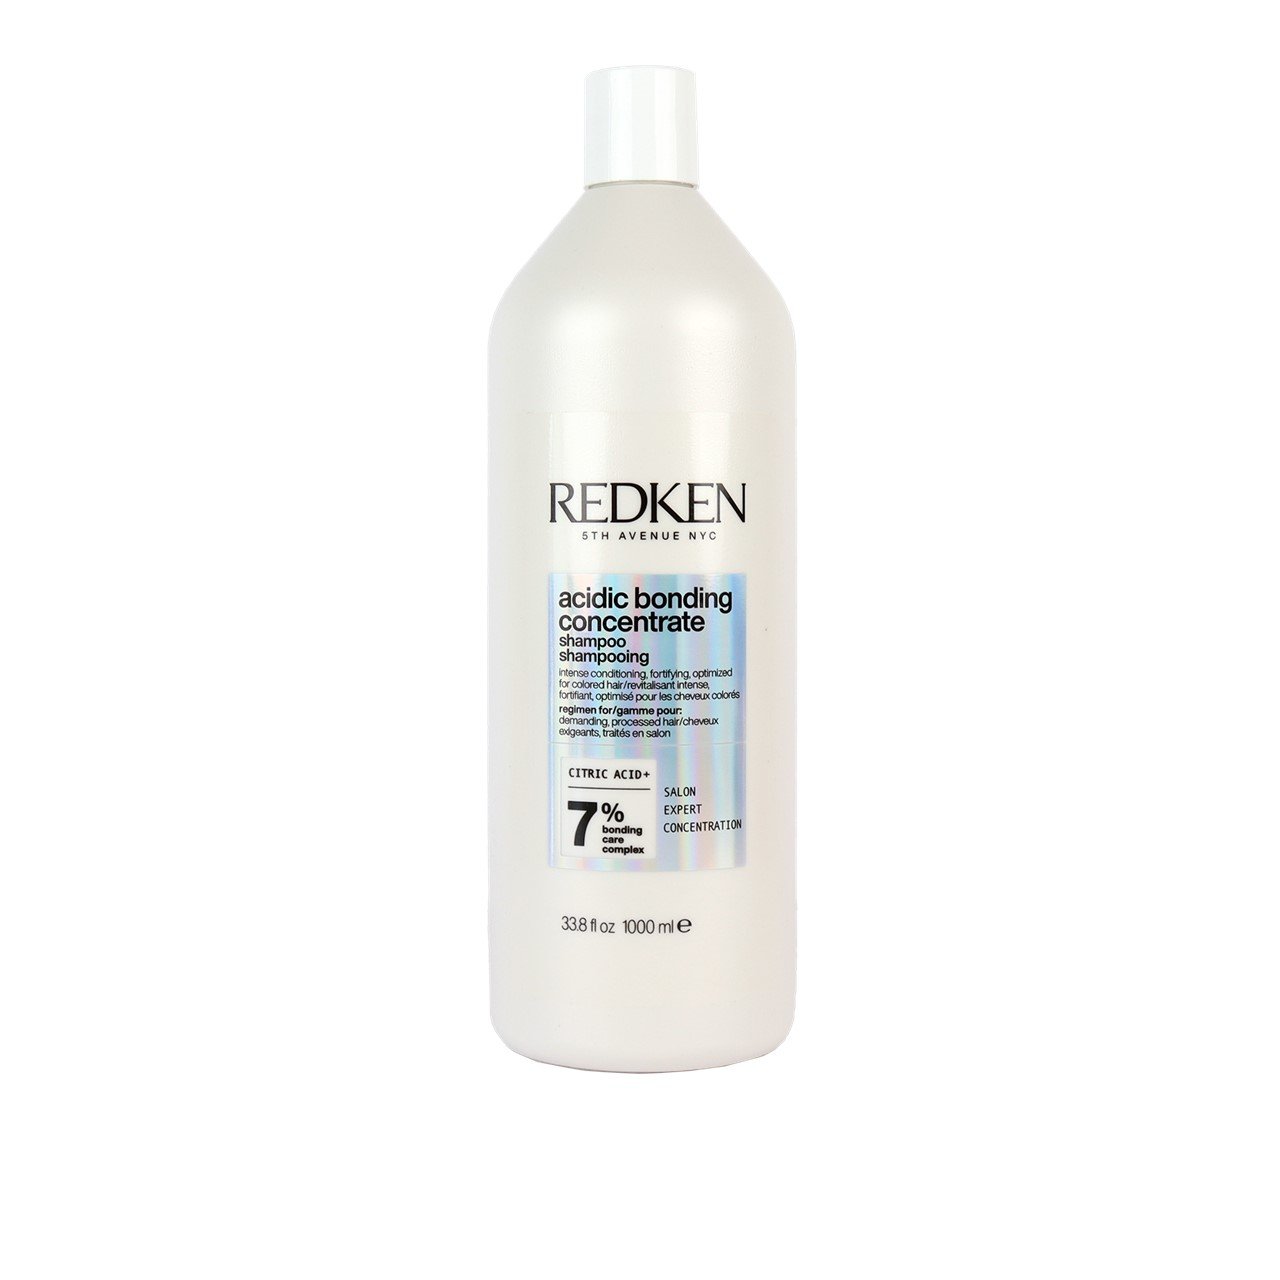 Redken Acidic Bonding Concentrate Shampoo 1L (33.81fl oz)